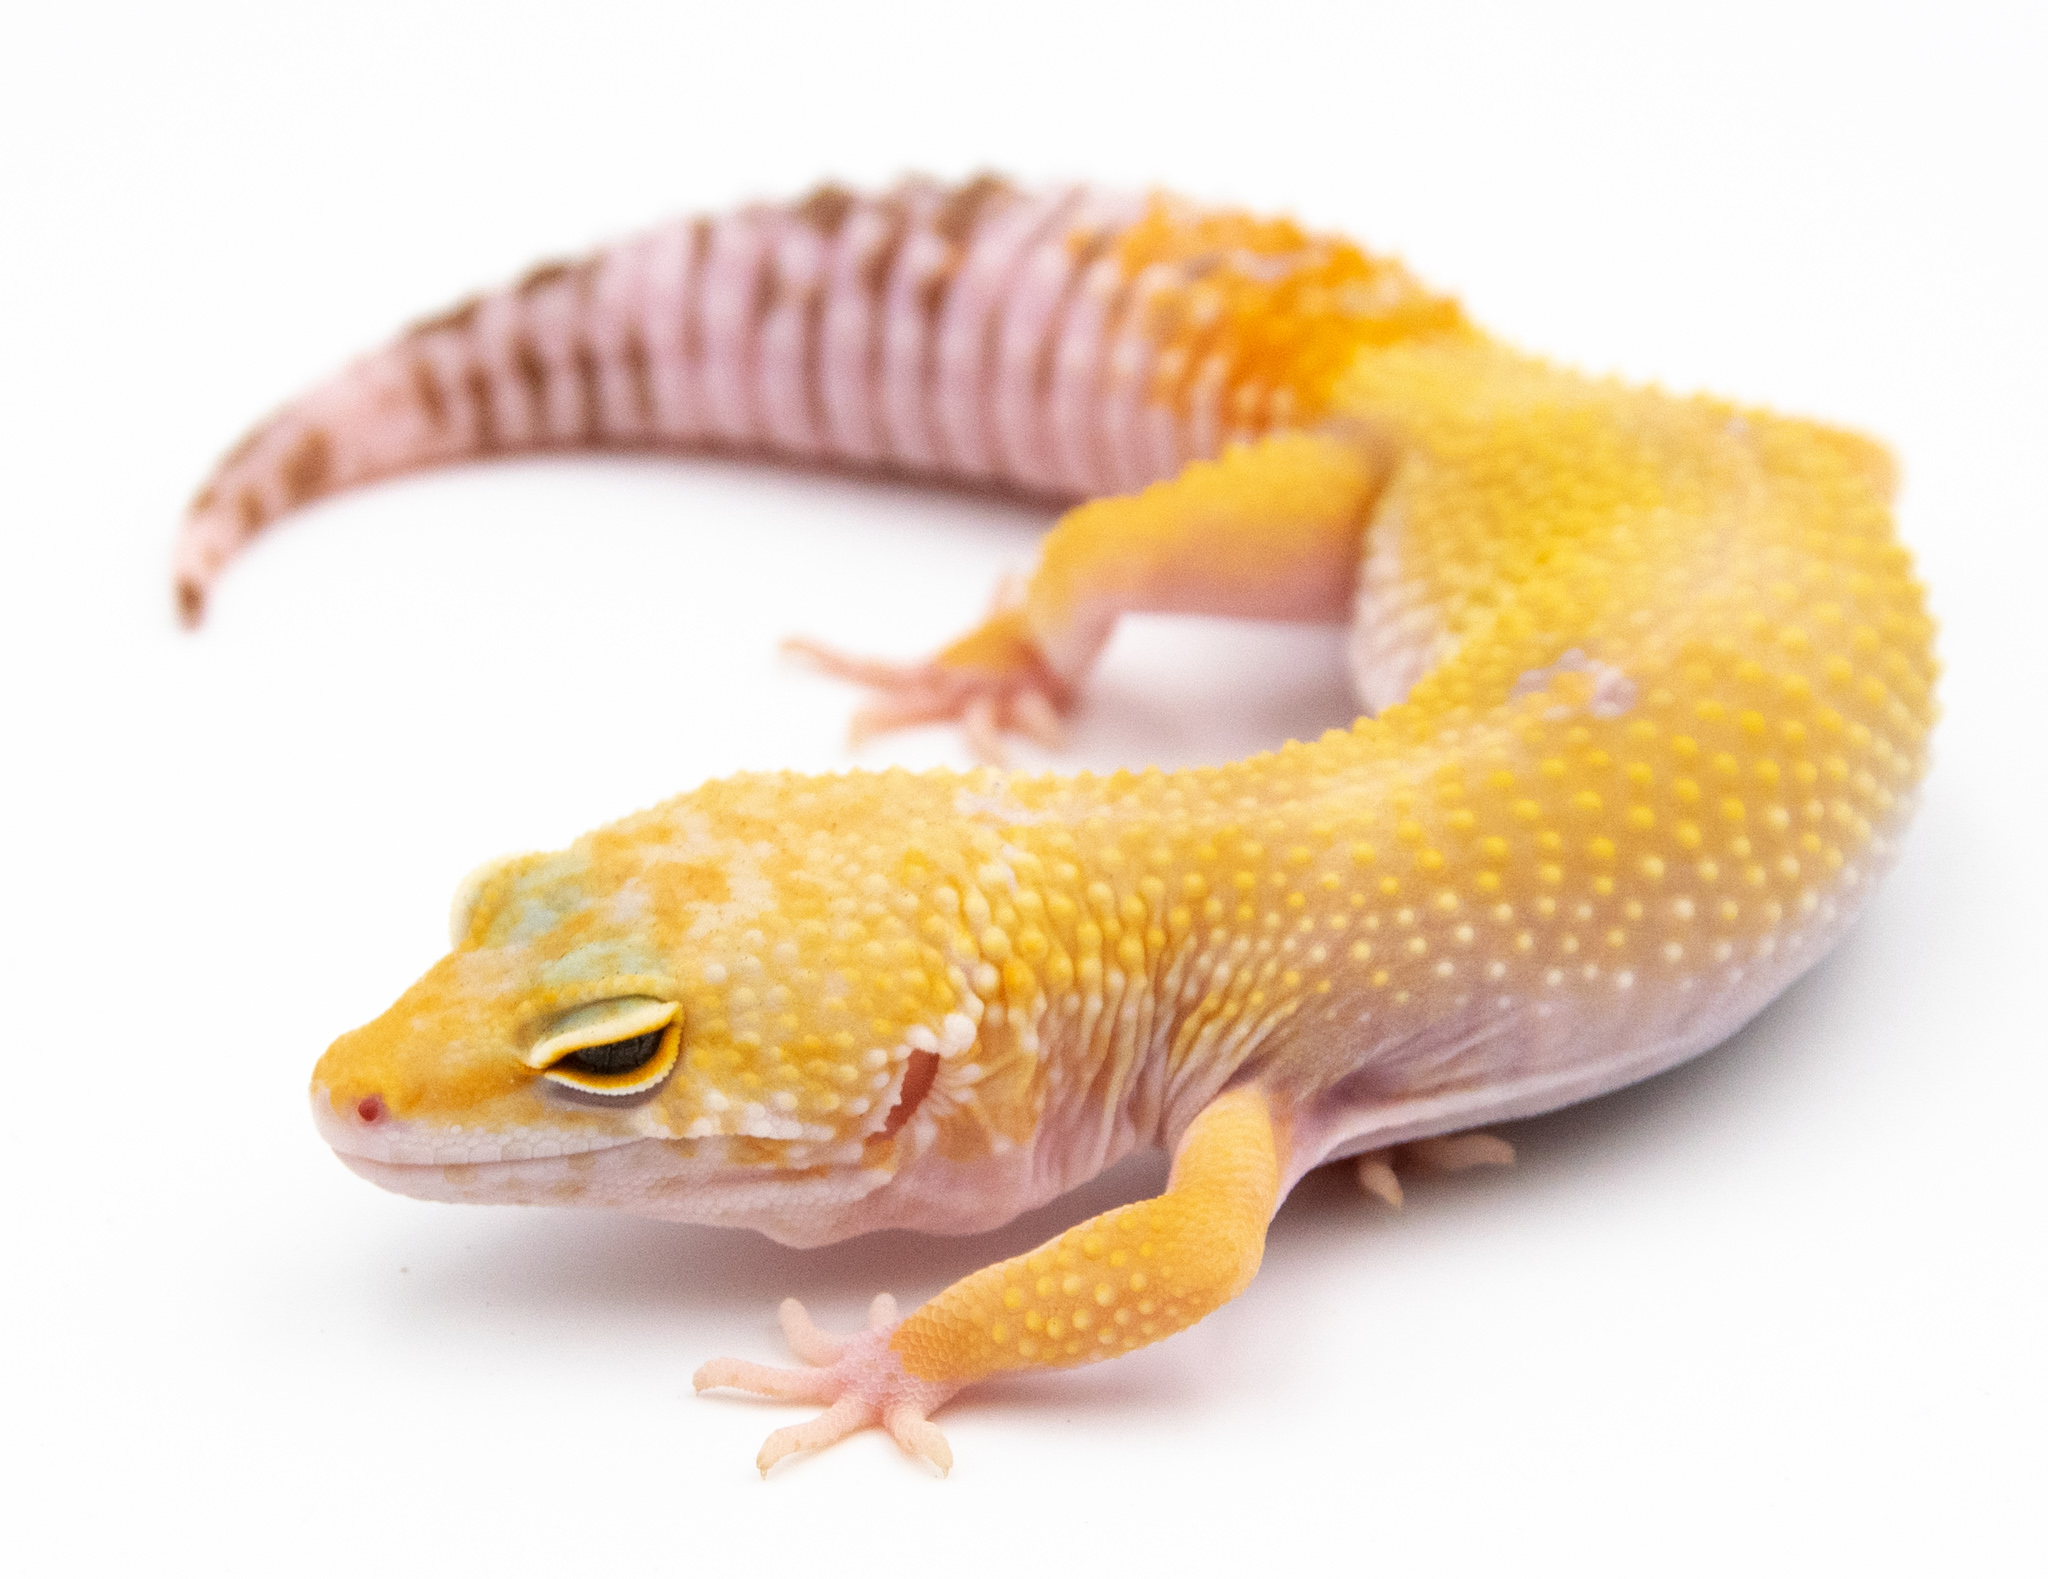 EJ06 - Gecko Léopard - Eublepharis Macularius Hybino Sunglow - non sexé - NC 2021